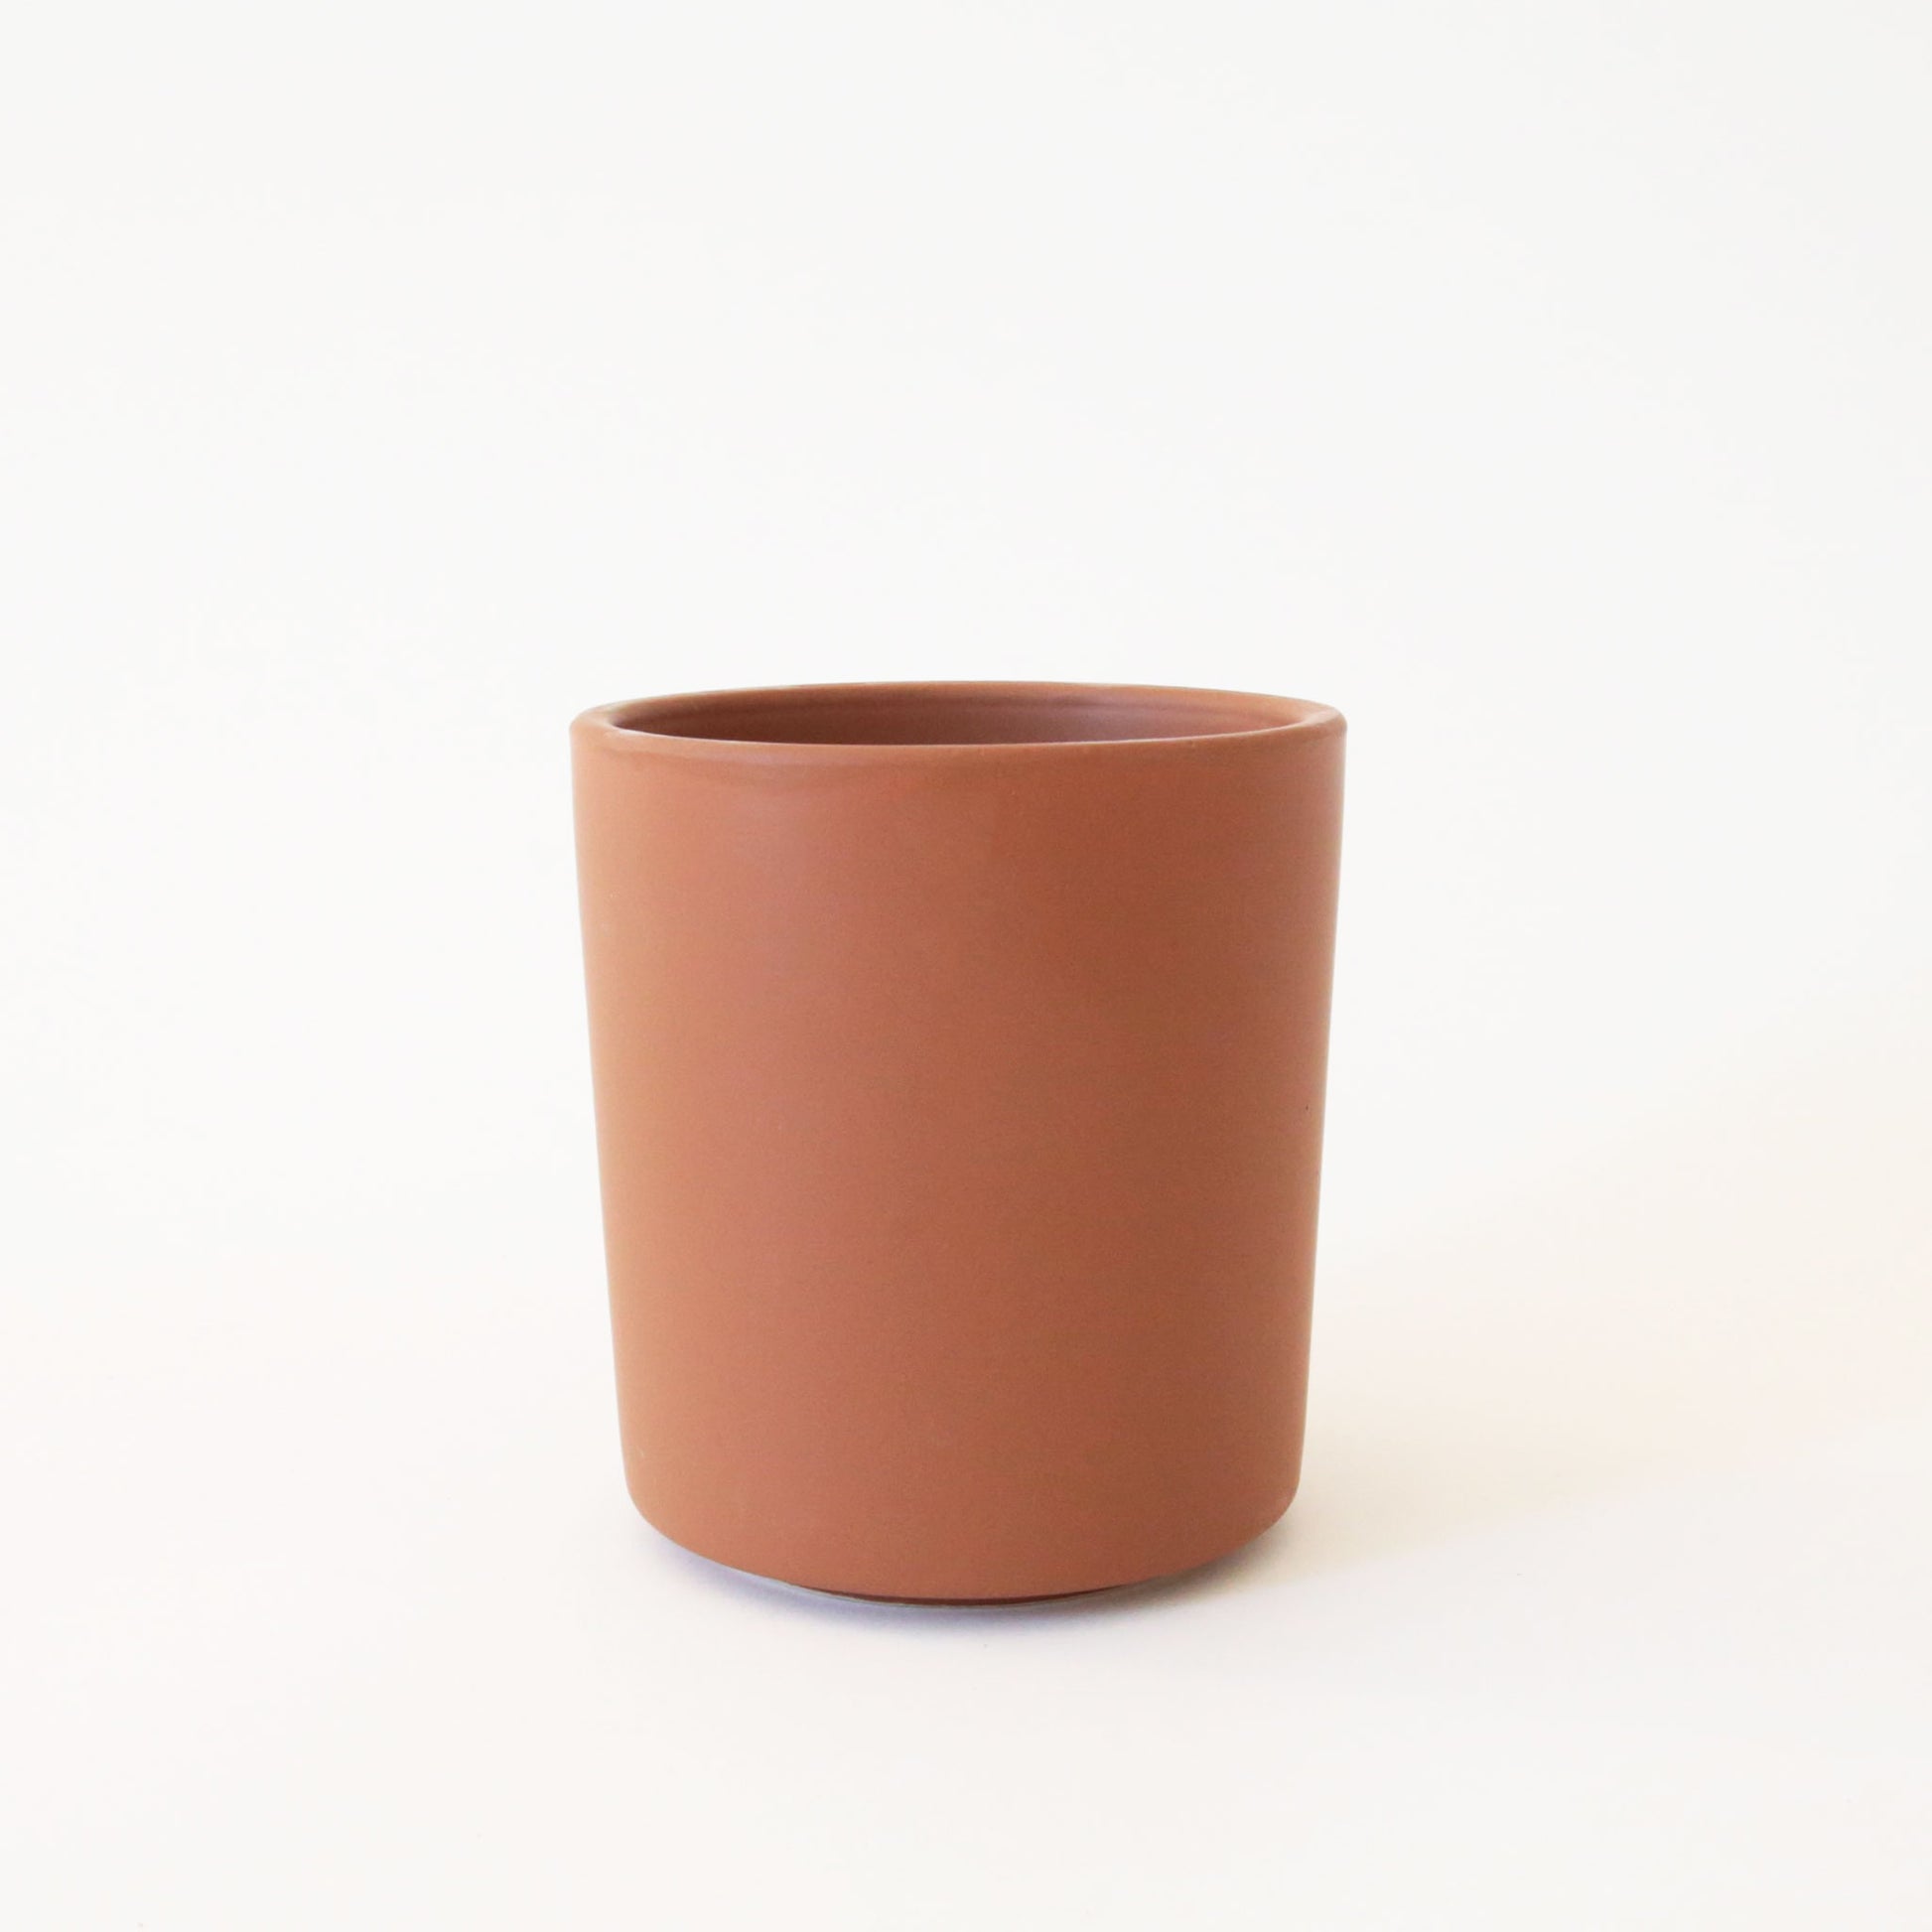 A mocha brown ceramic vase perfect for a succulent arrangement or a small plant.